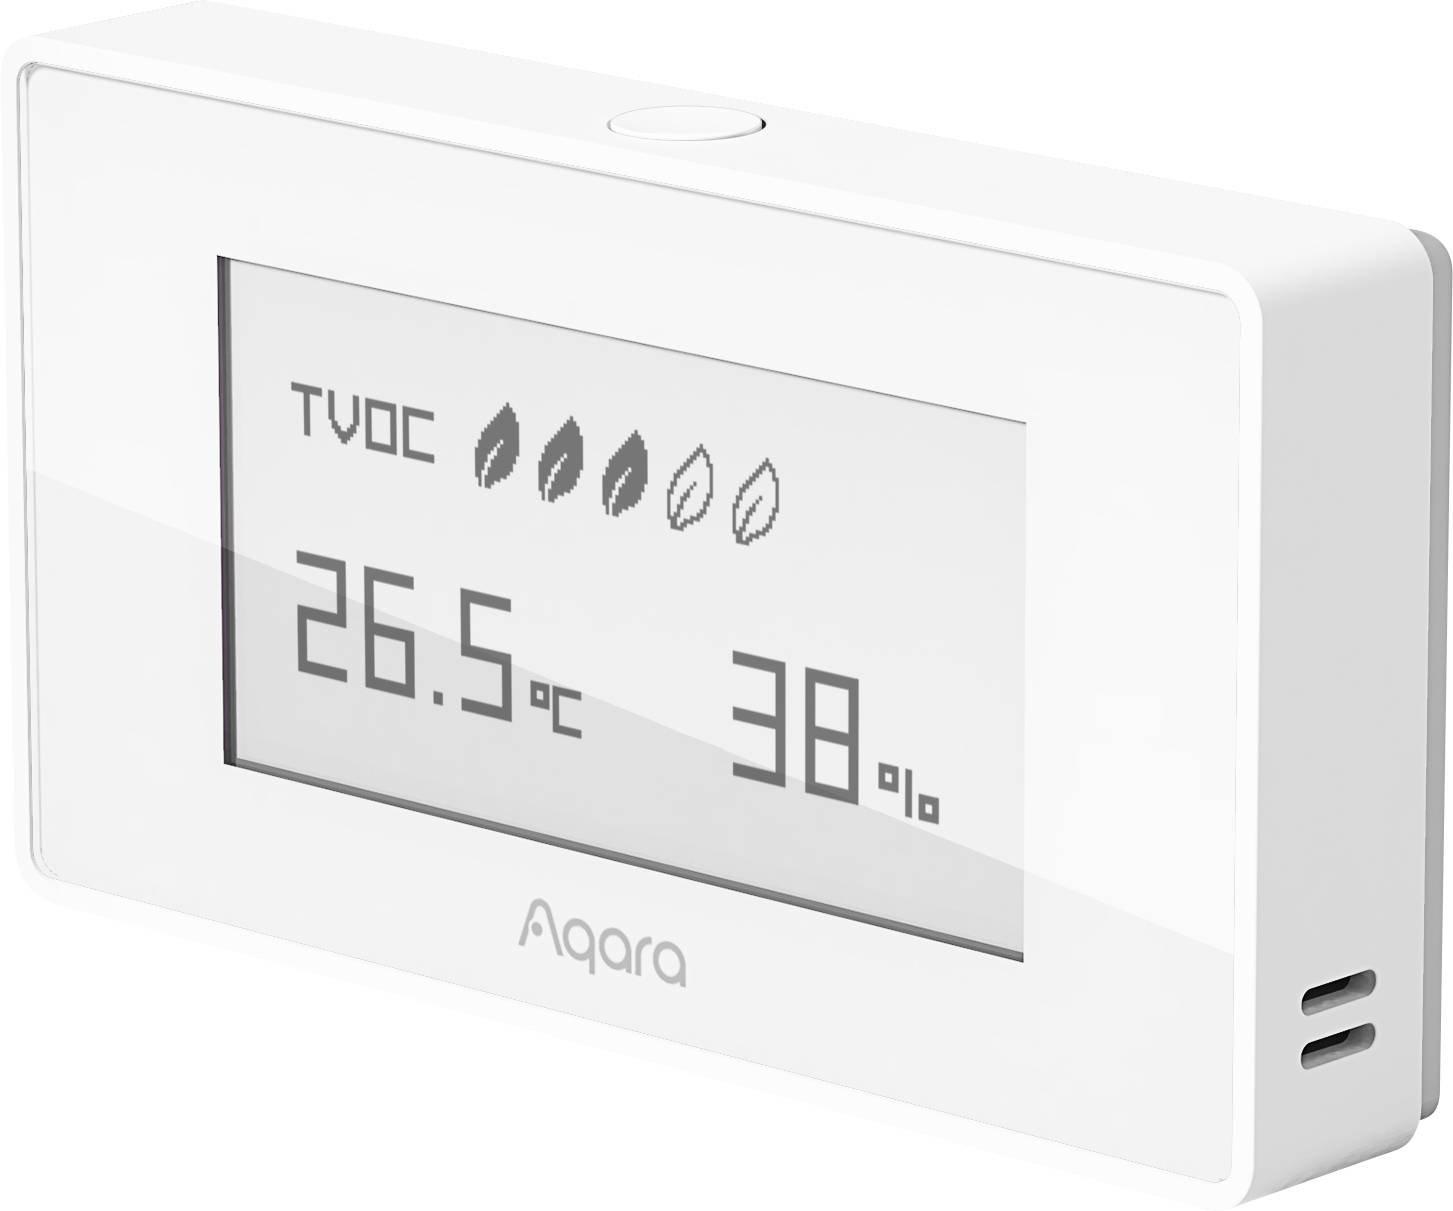 AQARA Smart Home TVOC Air Quality monitor kvality vzduchu